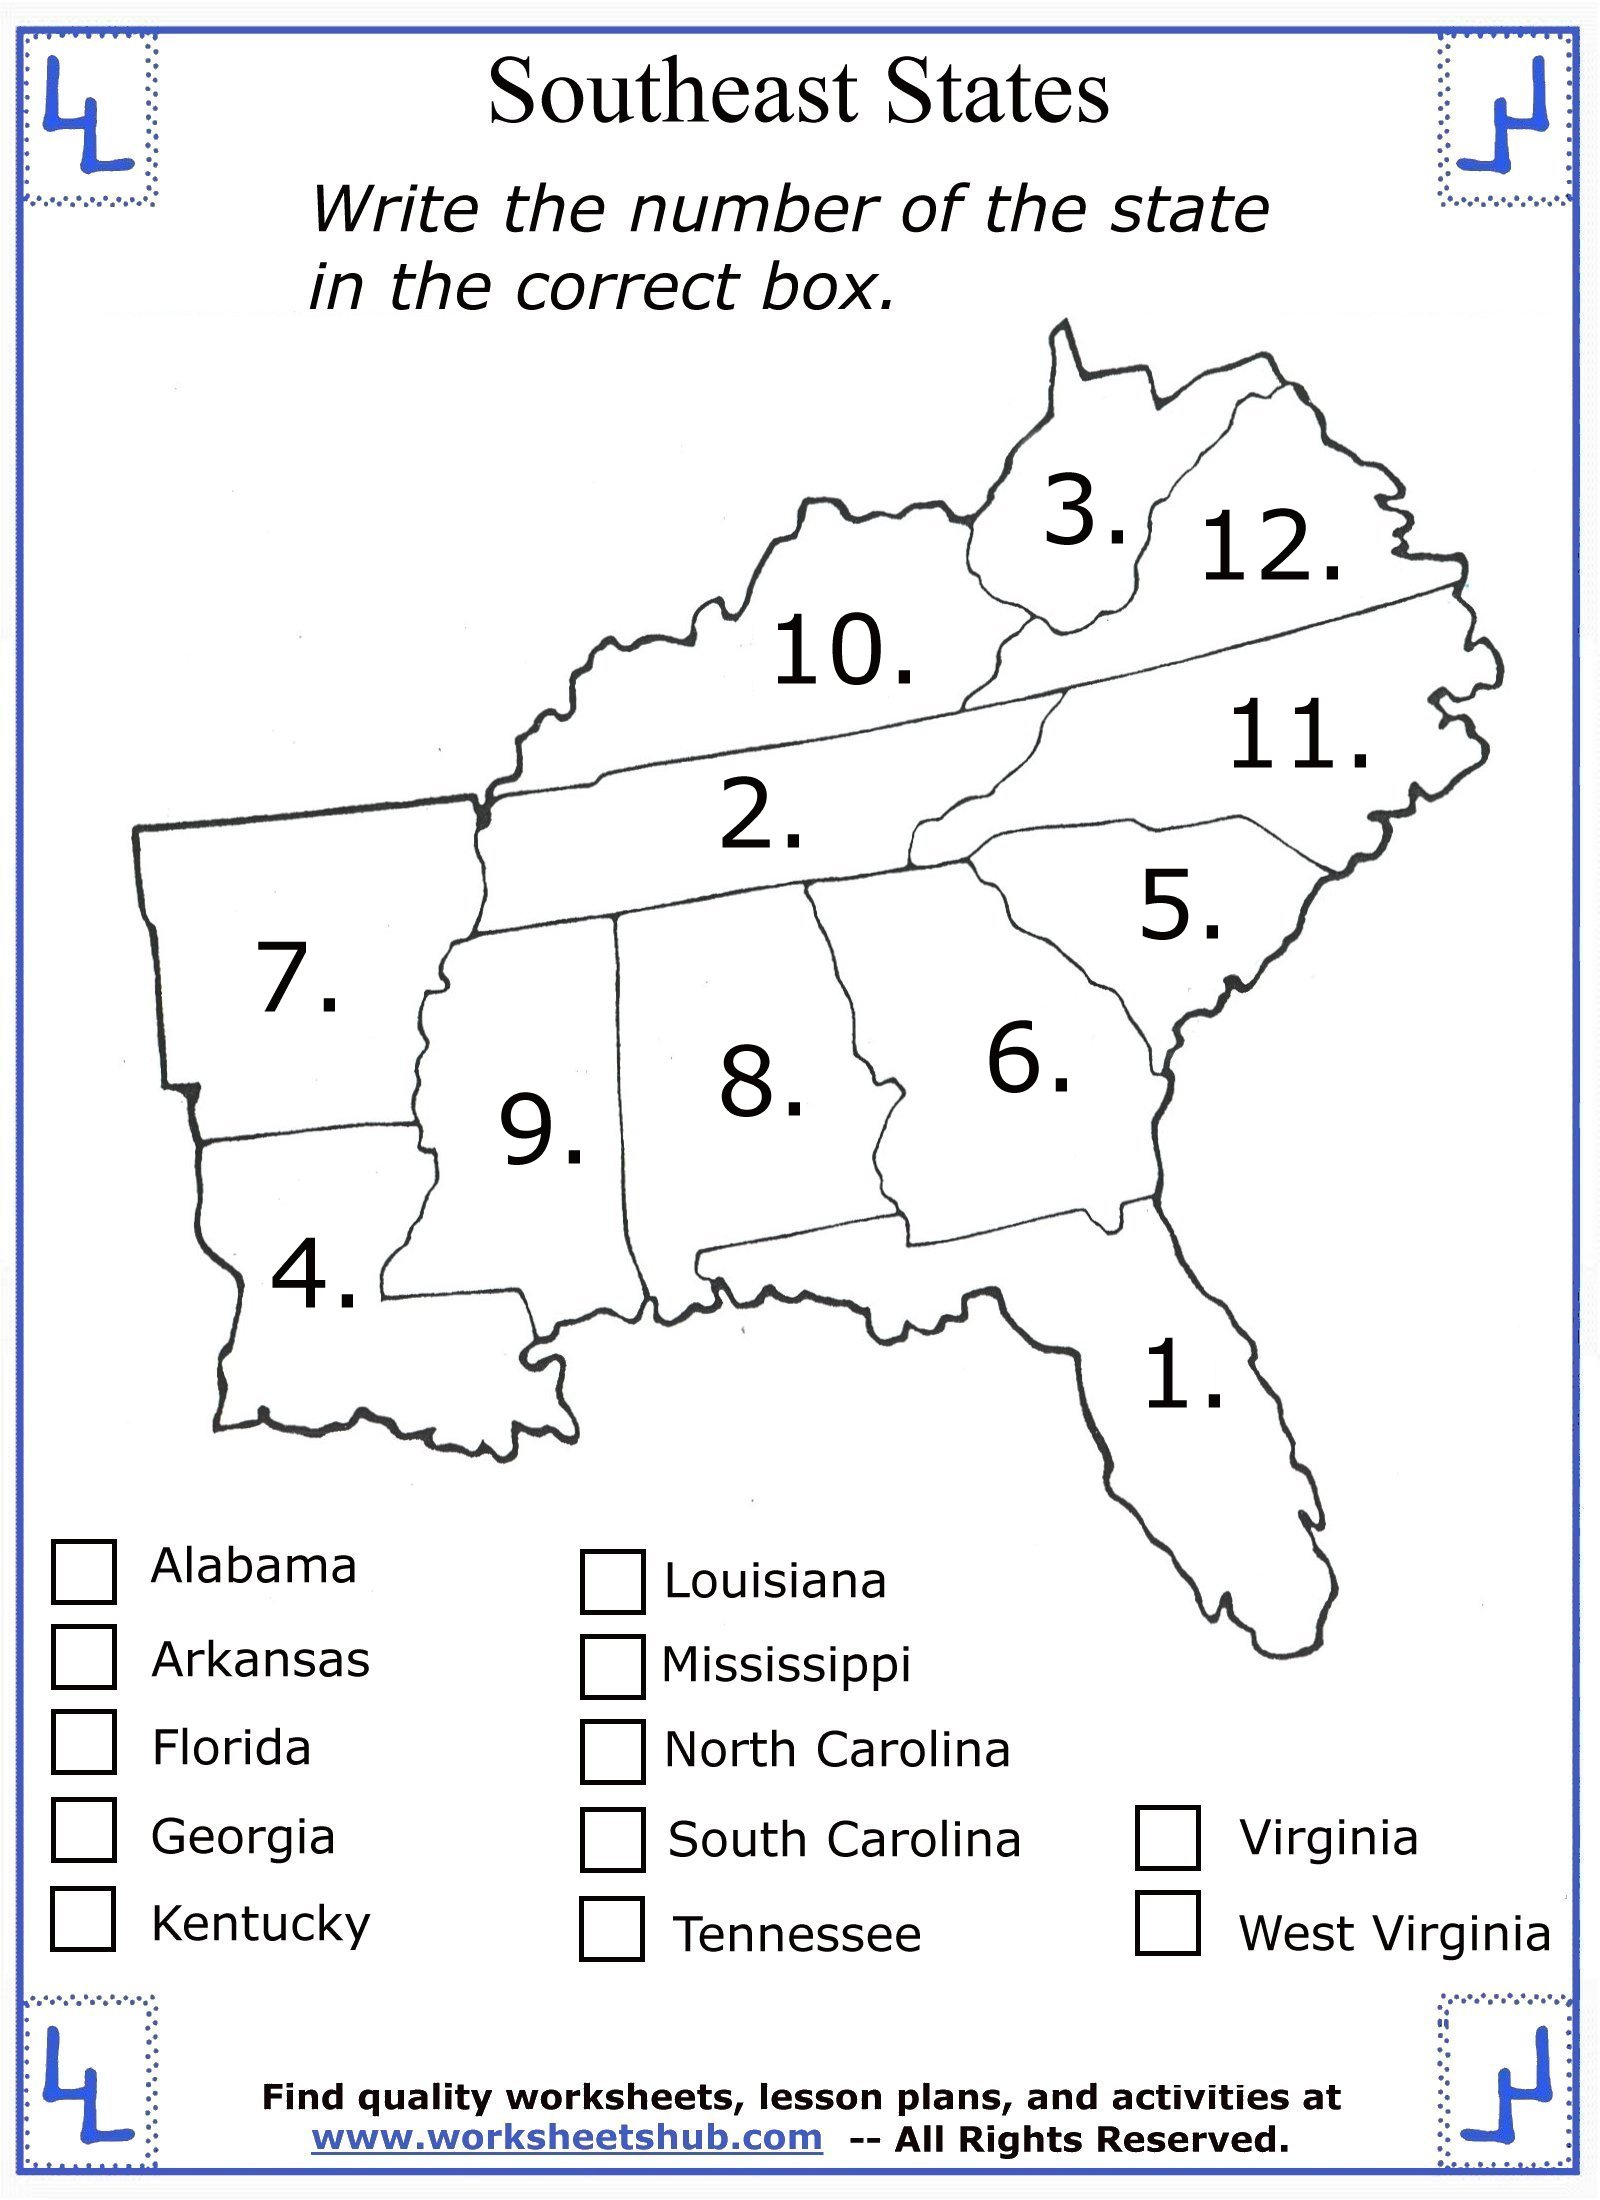 20th Grade Social Studies - Southeast Region States In 3rd Grade Social Studies Worksheet